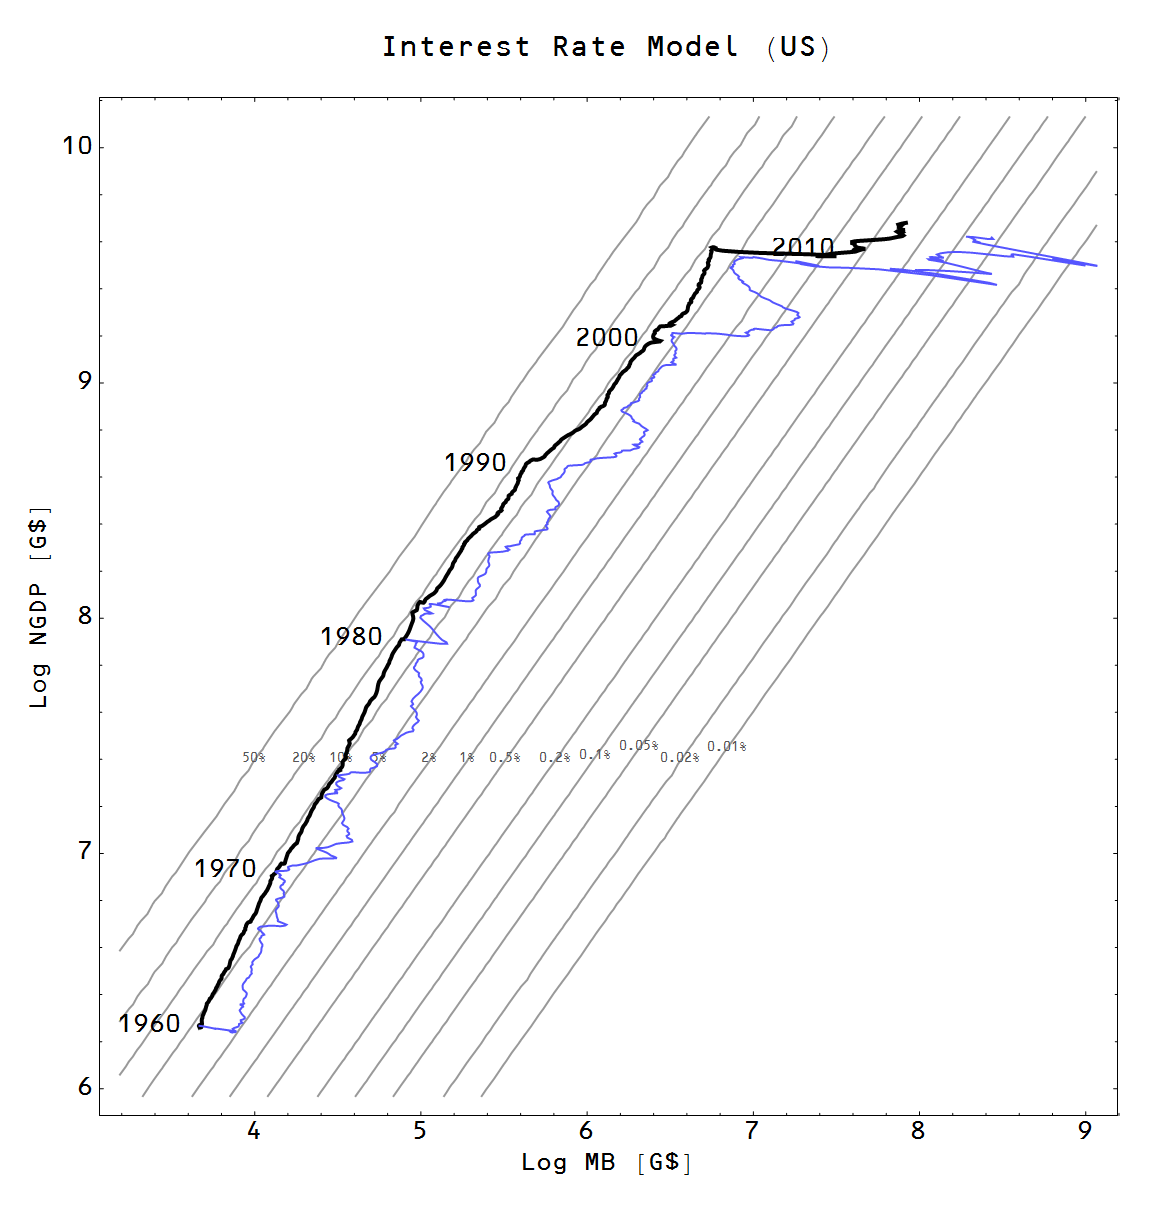 Information Transfer Economics Visualizing The Interest Rate